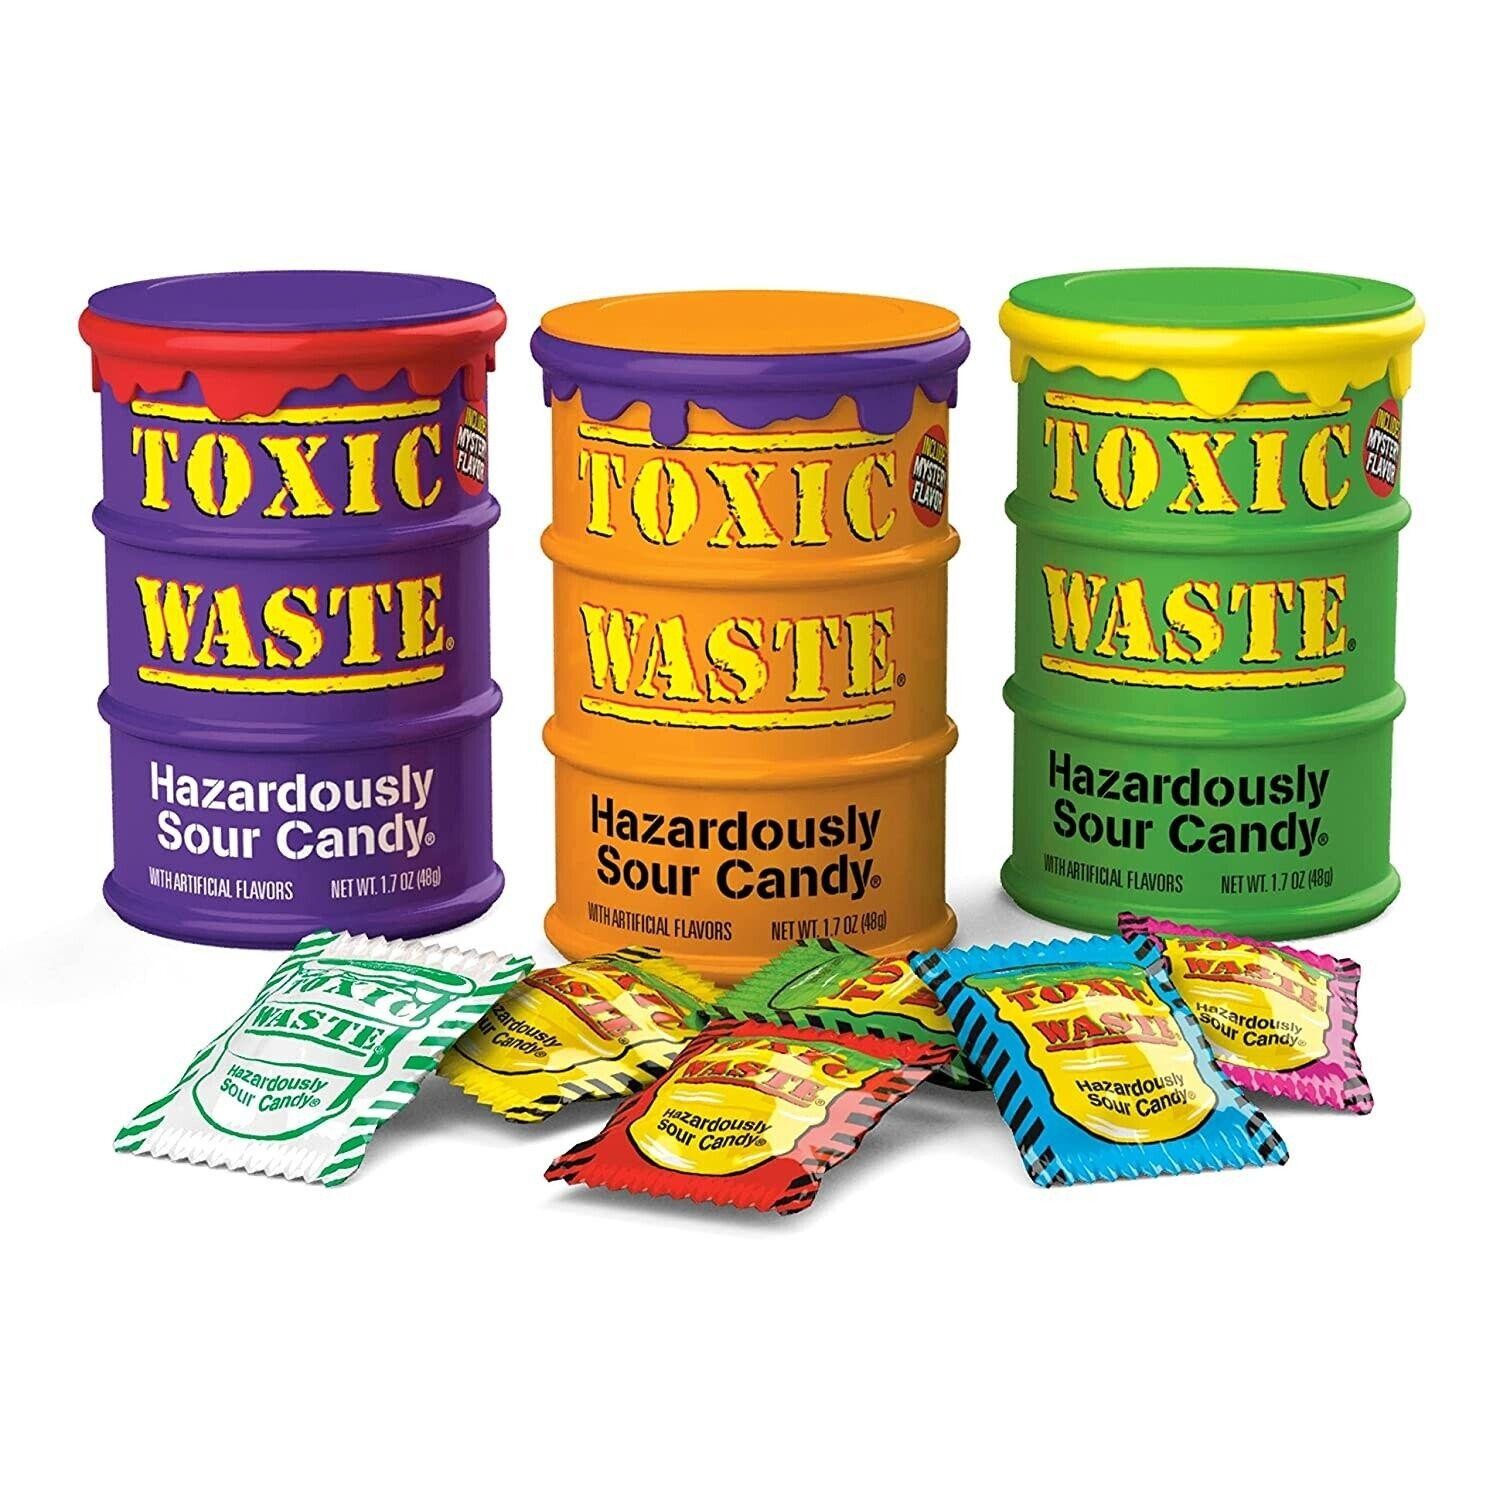 Toxic Water (hazardous Sour Candy)